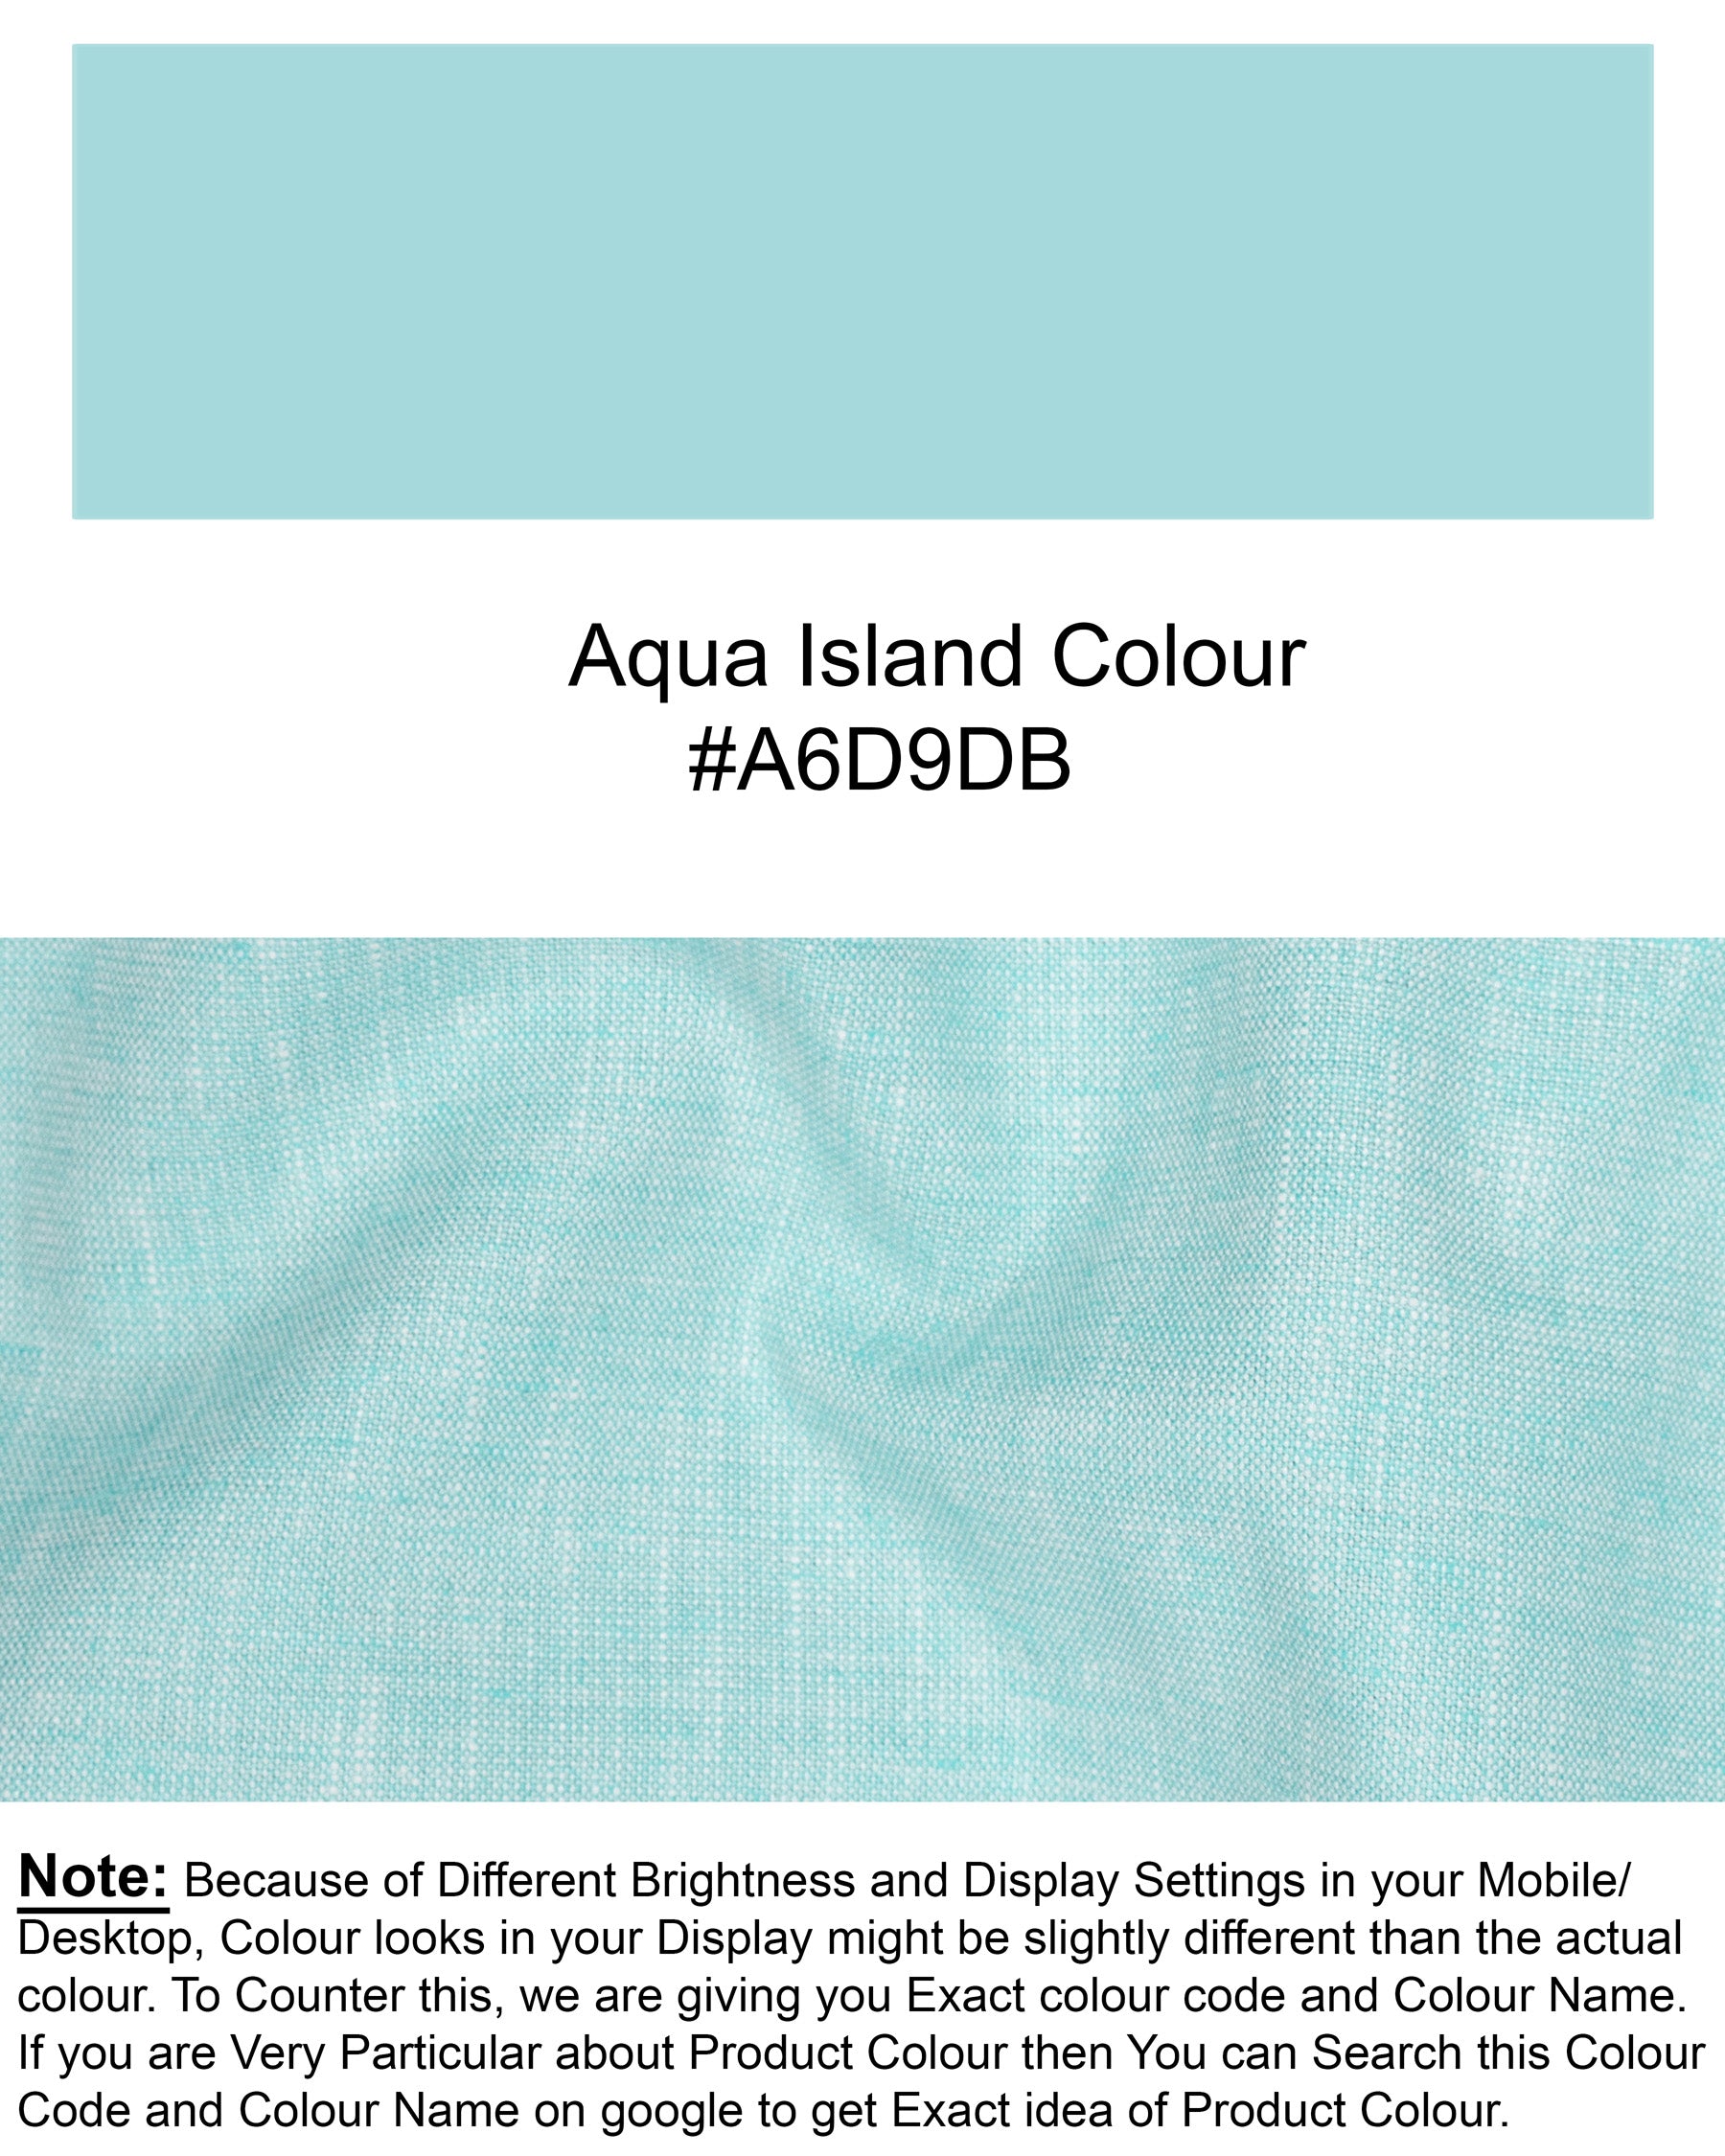 Aqua Island Blue Double BreaBled Luxurious Linen Blazer BL1542-DB-PP-36, BL1542-DB-PP-38, BL1542-DB-PP-40, BL1542-DB-PP-42, BL1542-DB-PP-44, BL1542-DB-PP-46, BL1542-DB-PP-48, BL1542-DB-PP-50, BL1542-DB-PP-52, BL1542-DB-PP-54, BL1542-DB-PP-56, BL1542-DB-PP-58, BL1542-DB-PP-60